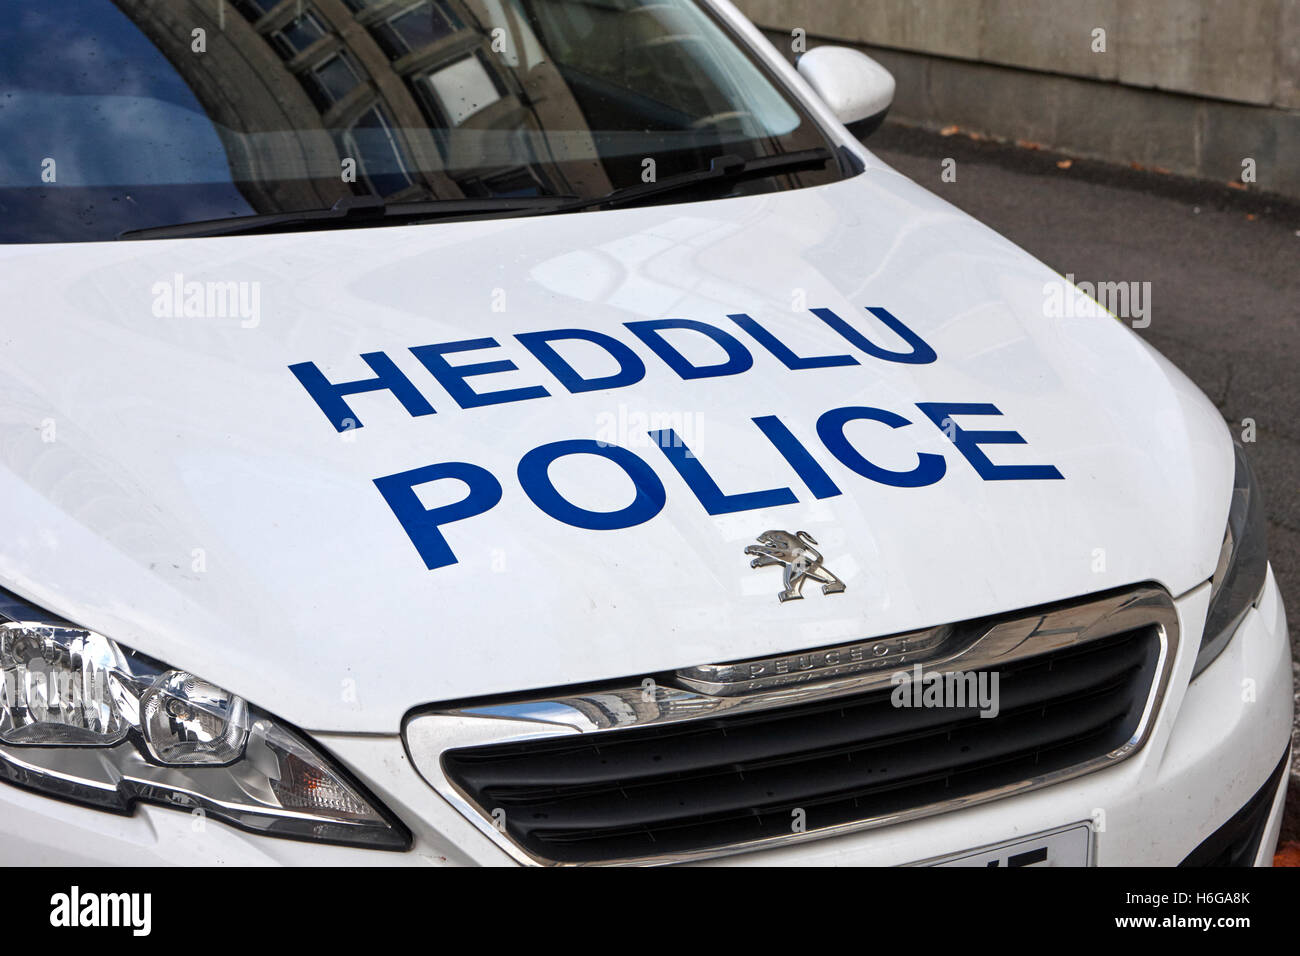 south wales police heddlu bilingual vehicle livery Cardiff Wales United Kingdom Stock Photo